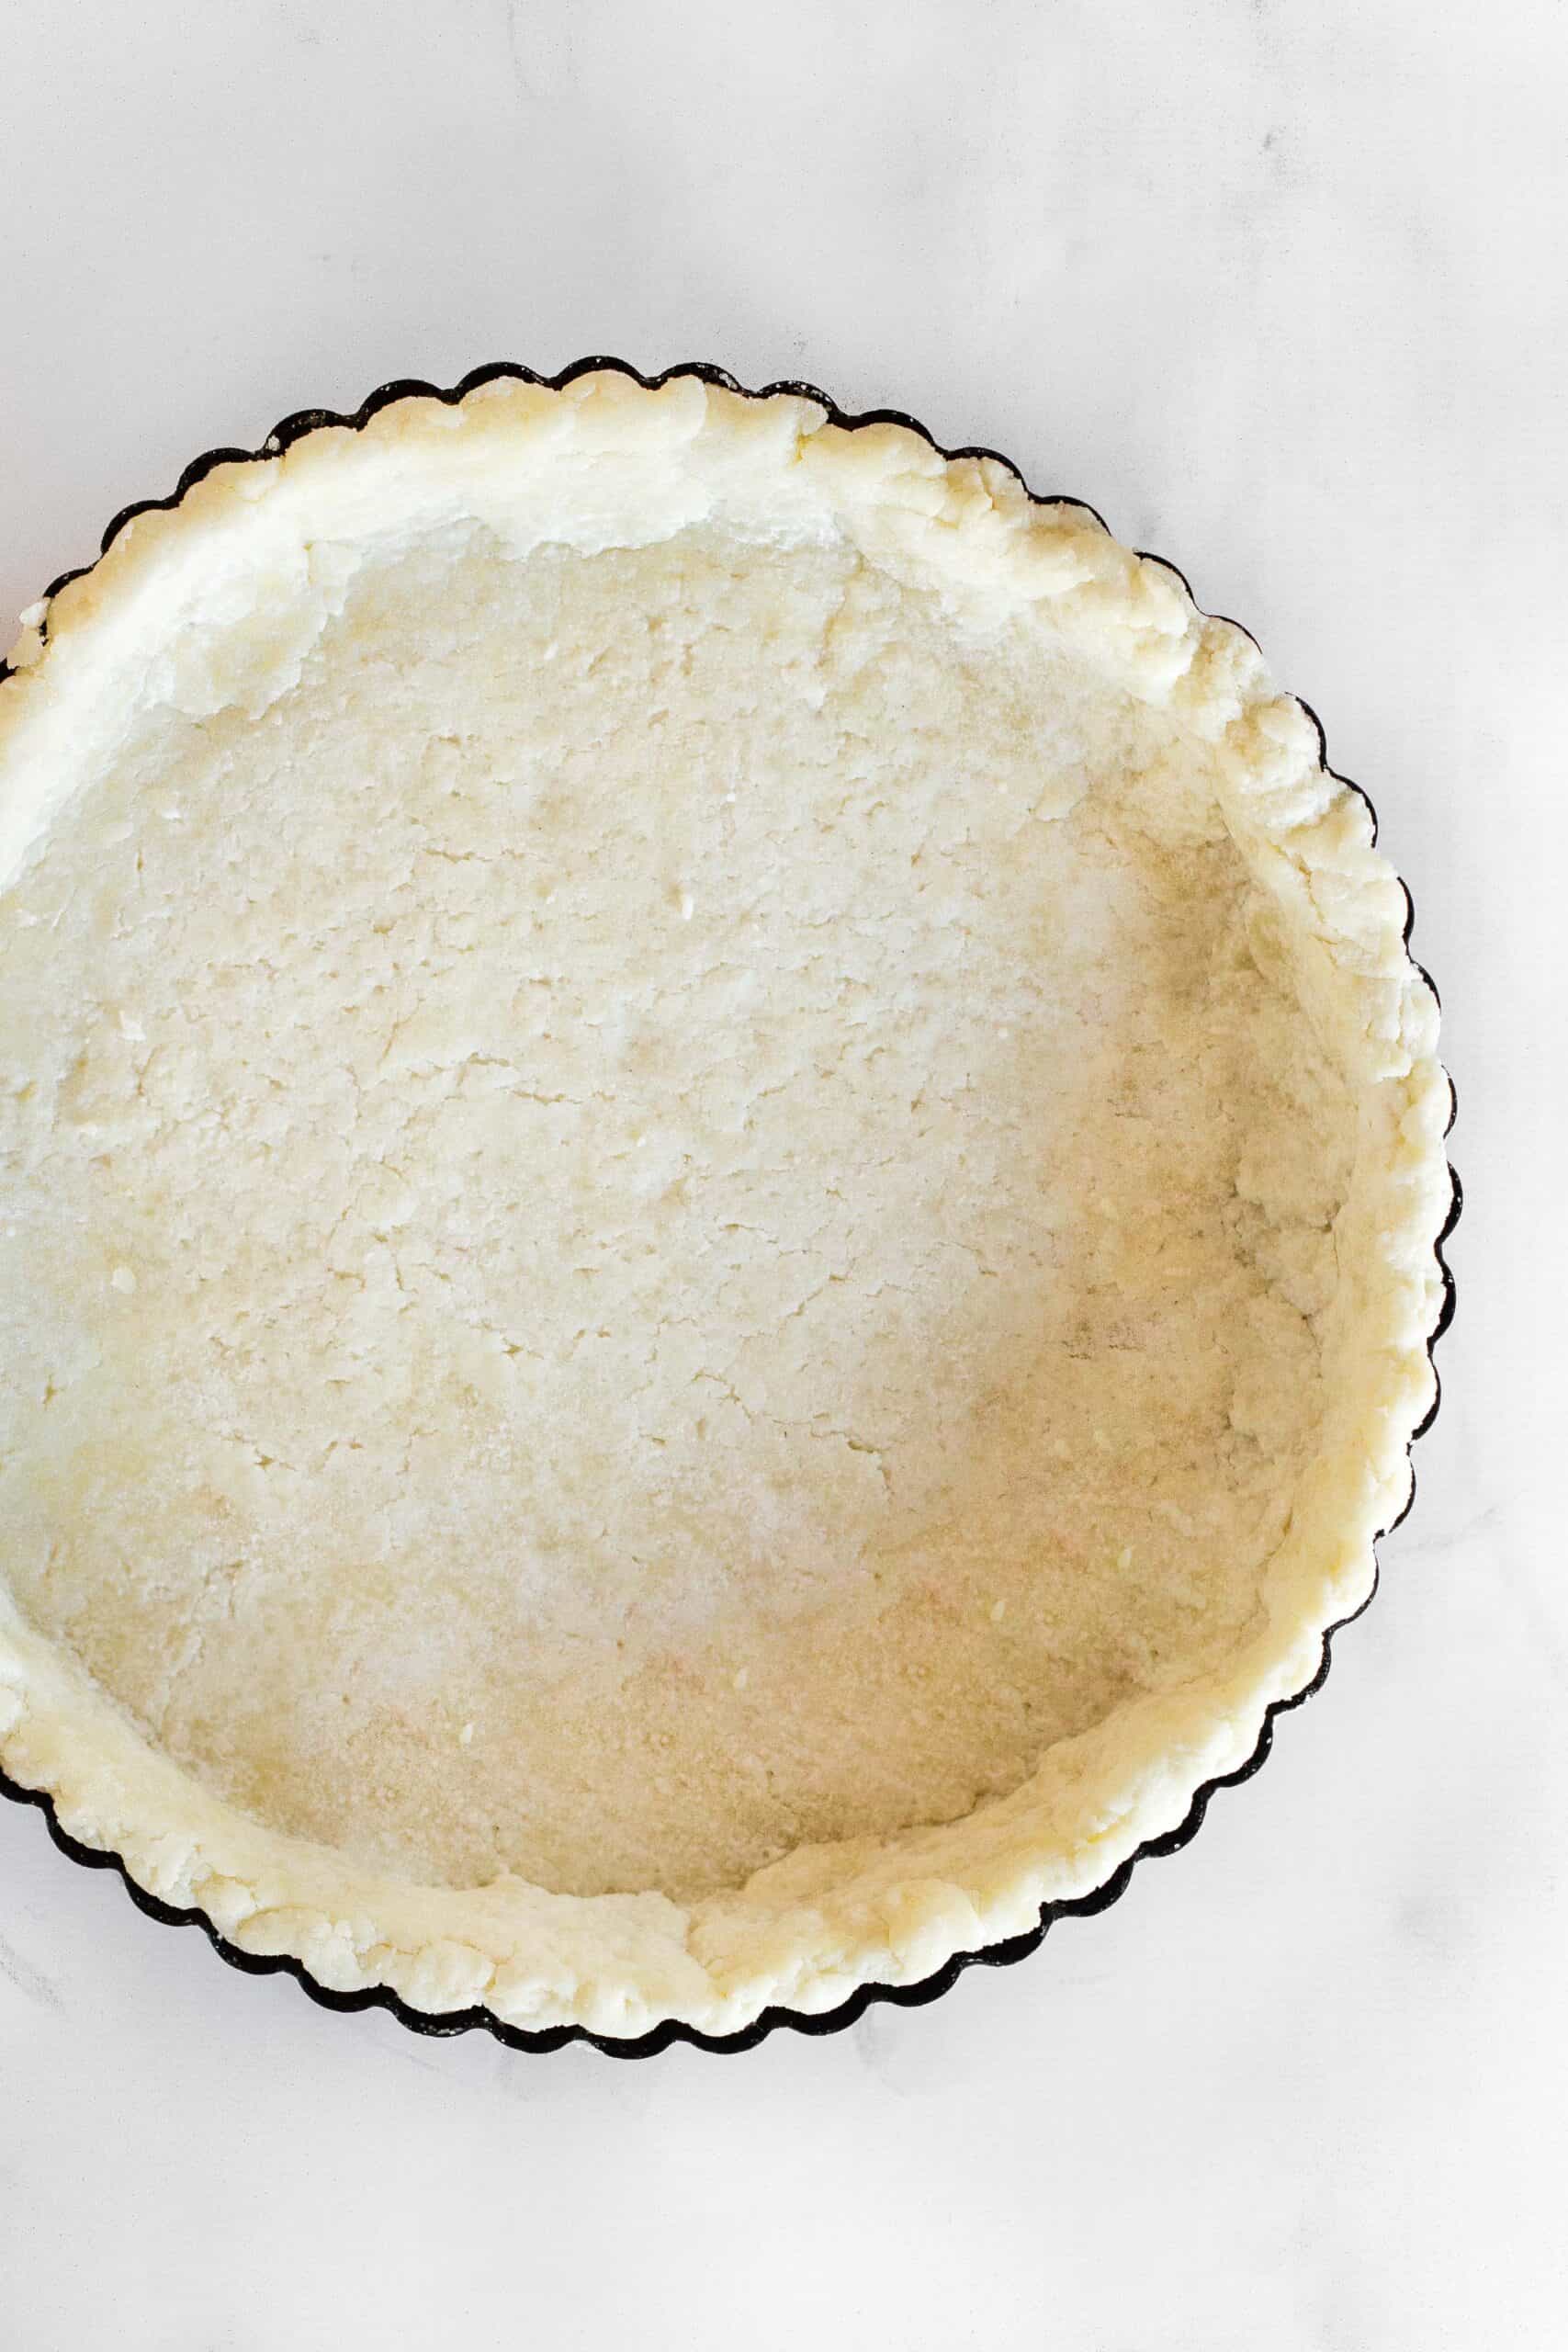 Par-baked gluten-free pie crust in a pie pan.